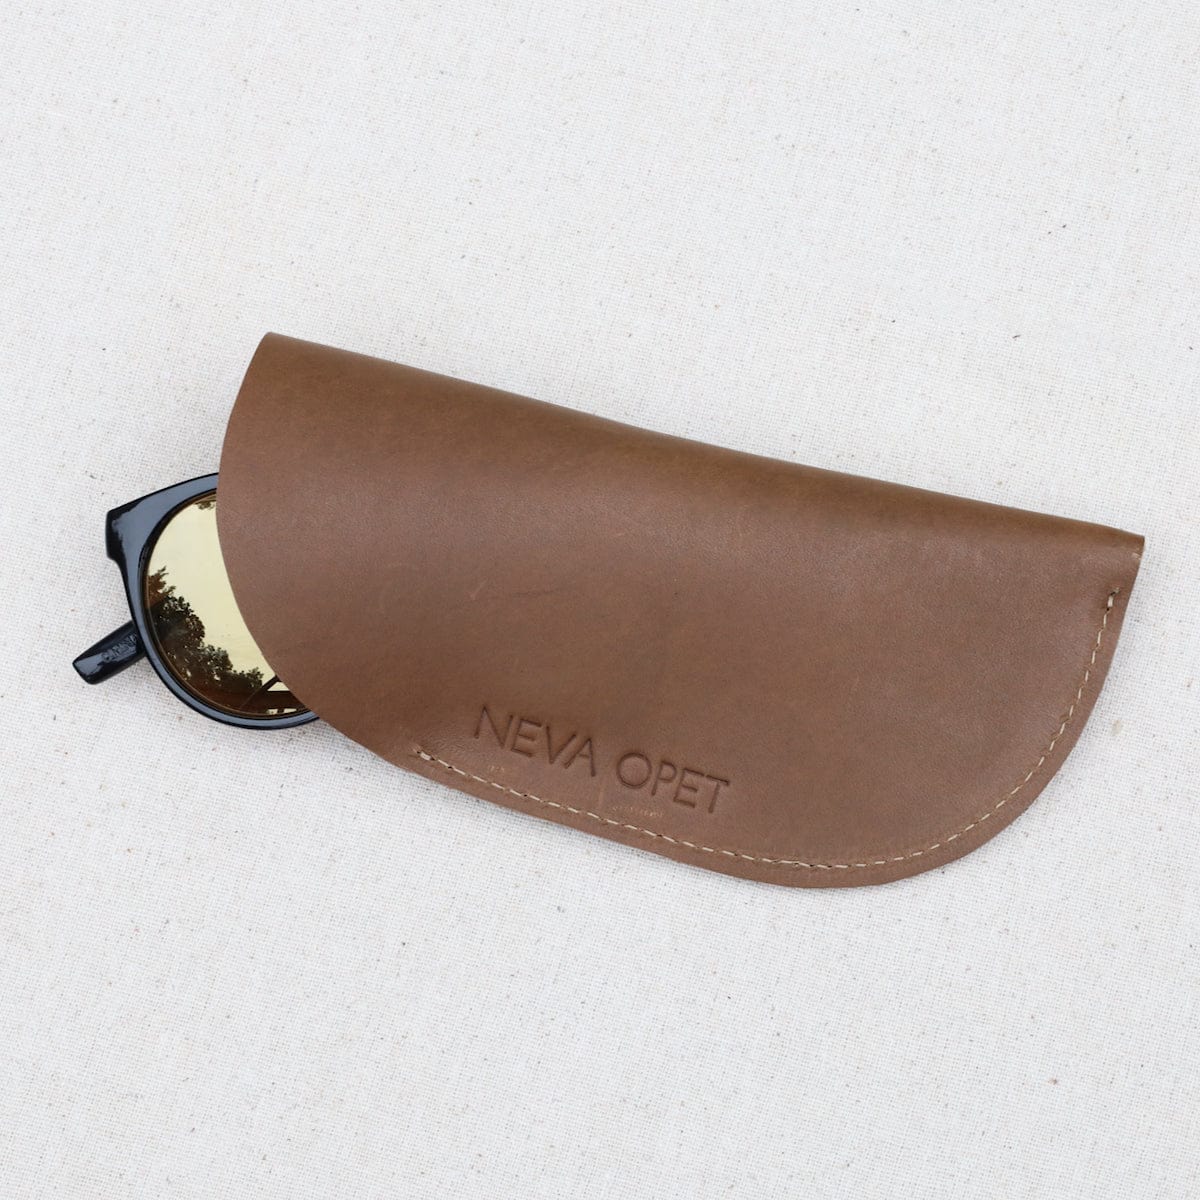 ACC Leather Sunglass Case in Cocoa